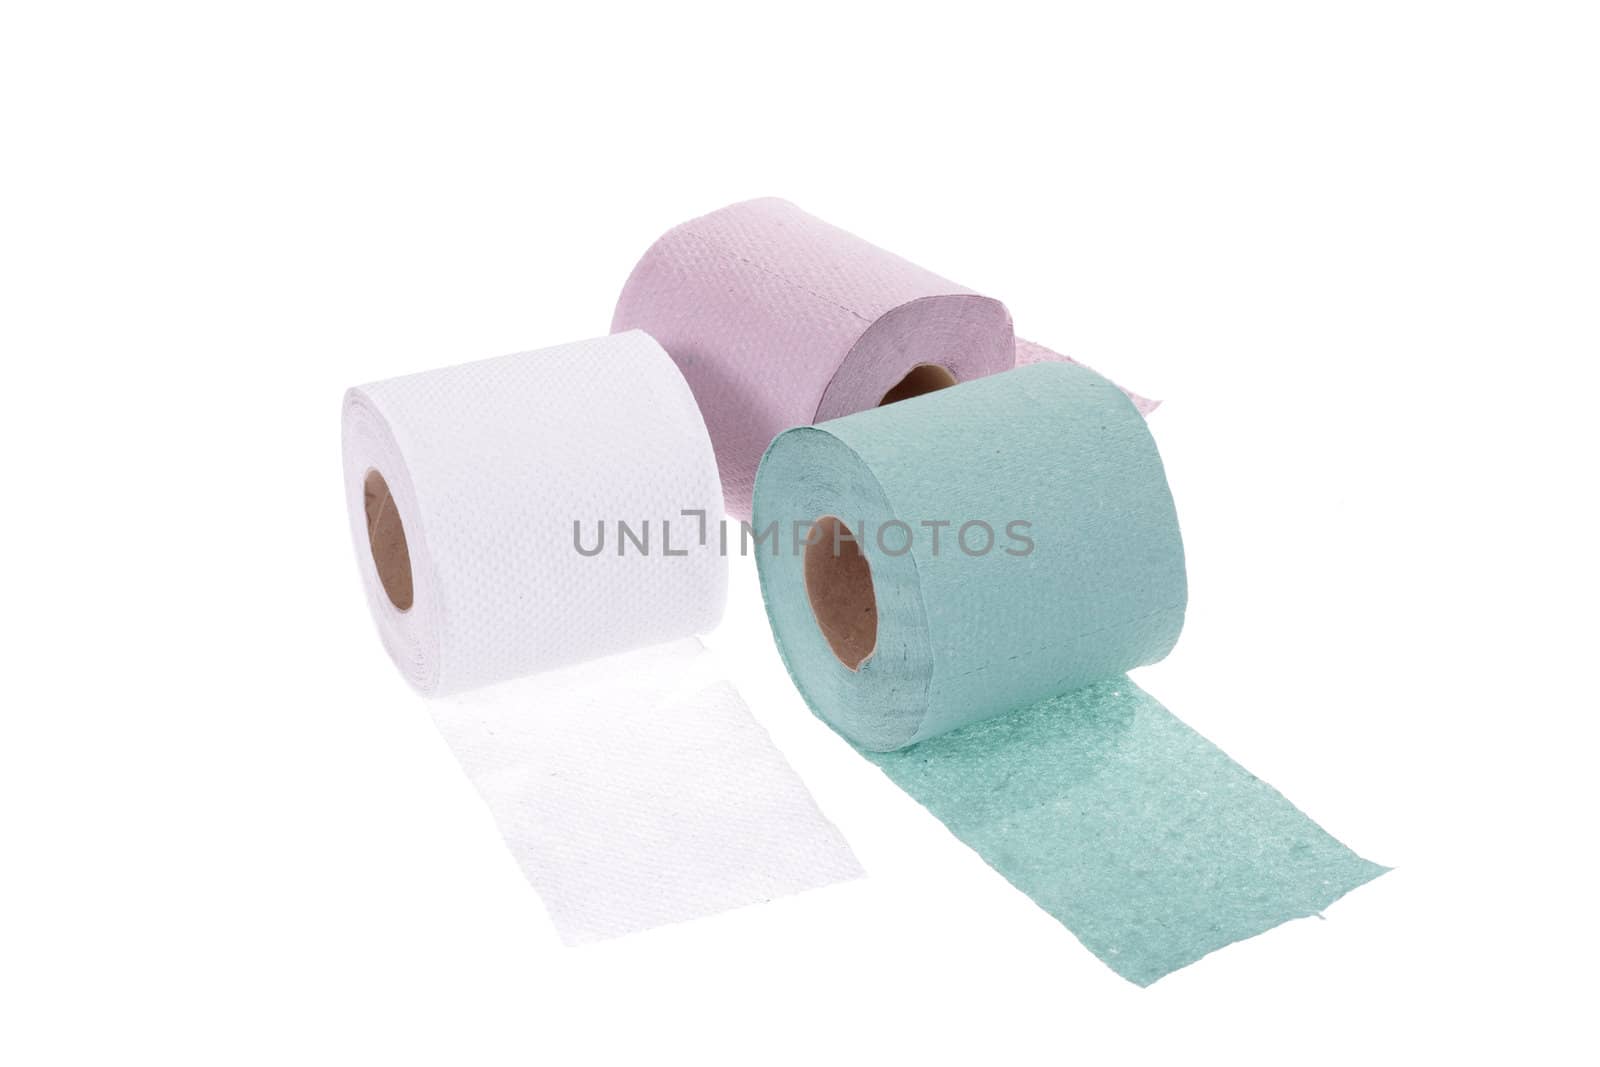 Toilet paper, photo on the white background